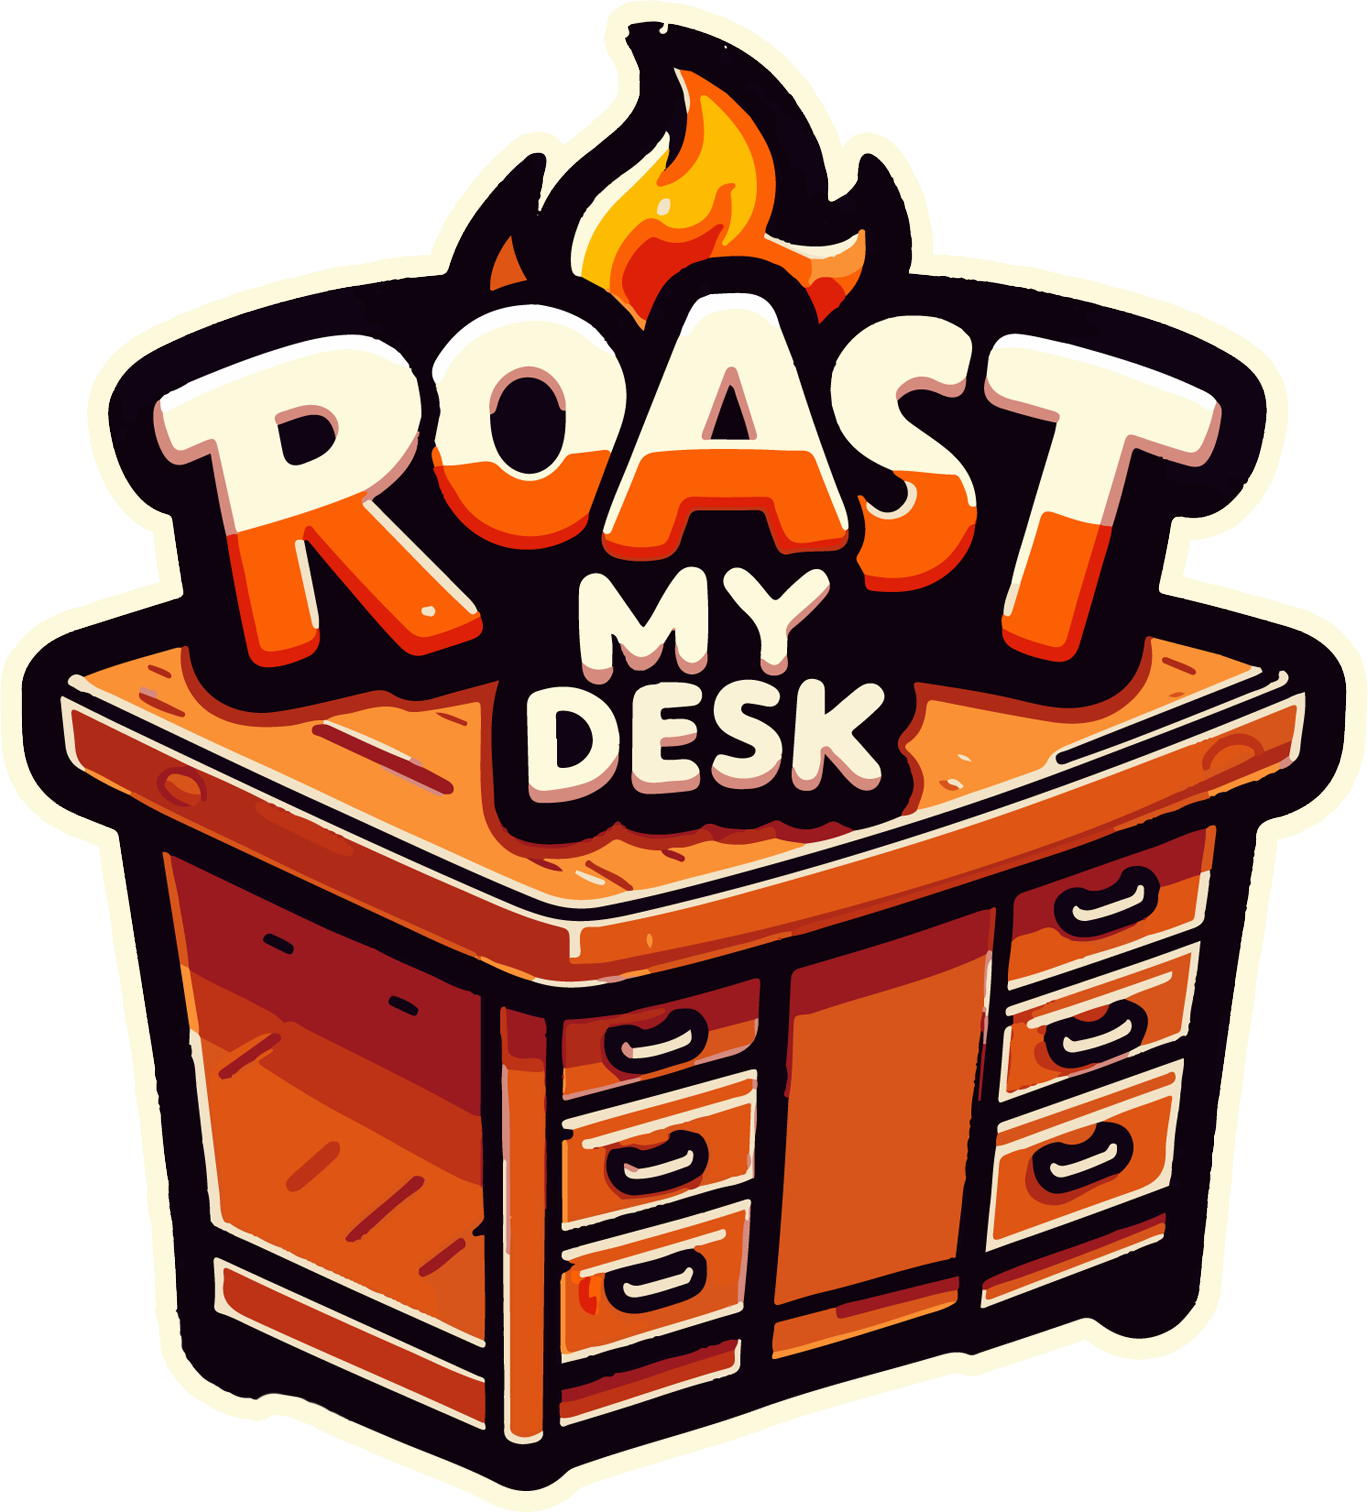 Roast my desk